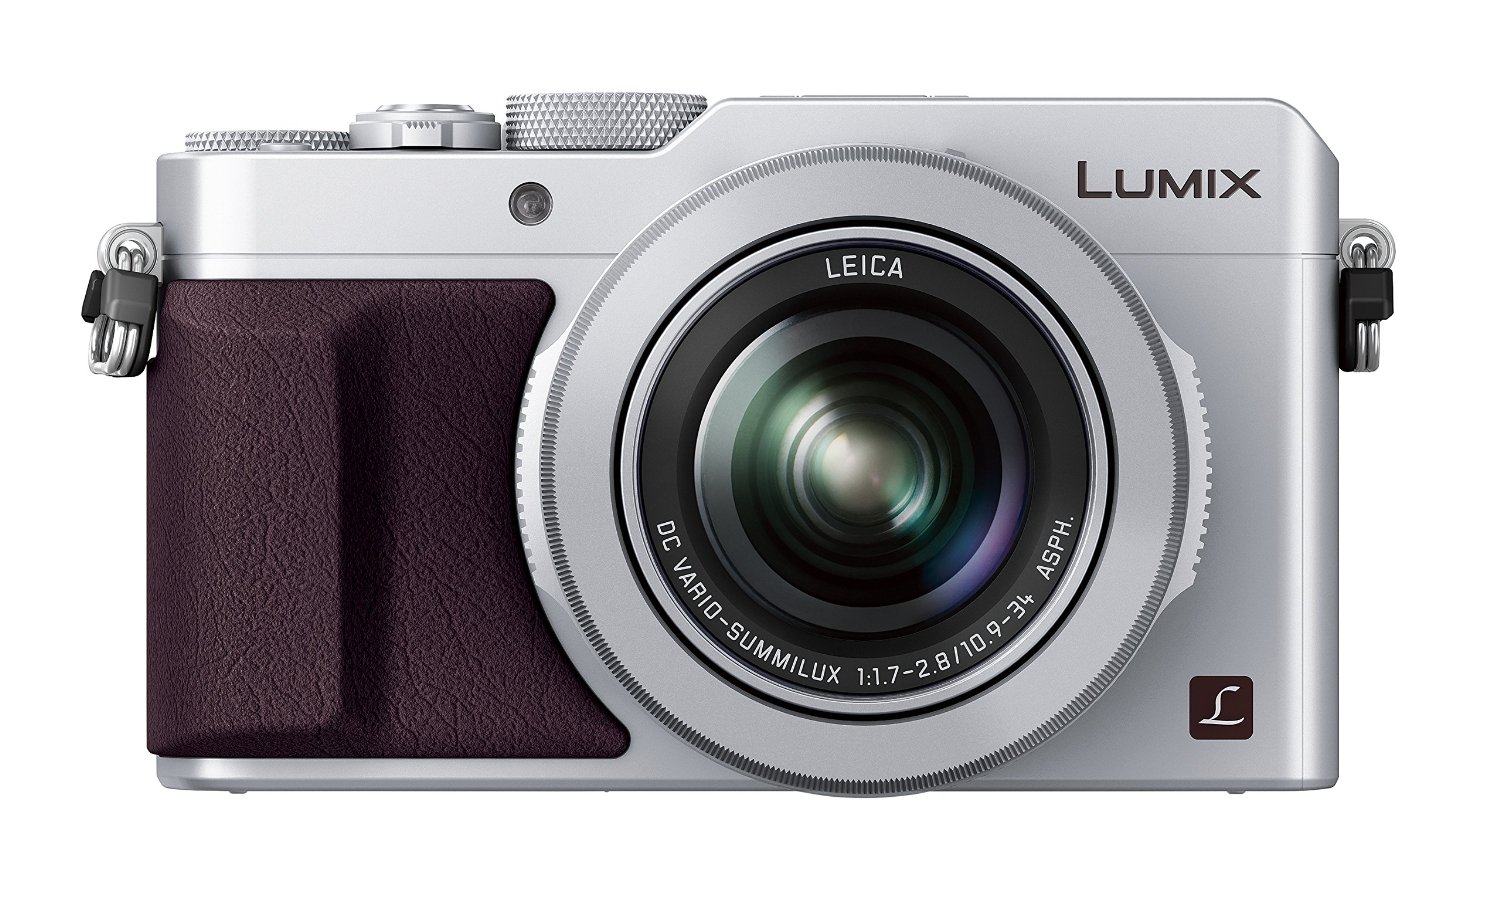 PHOTOGRAPHIC CENTRAL: Panasonic Lumix DMC-LX100 Review- The